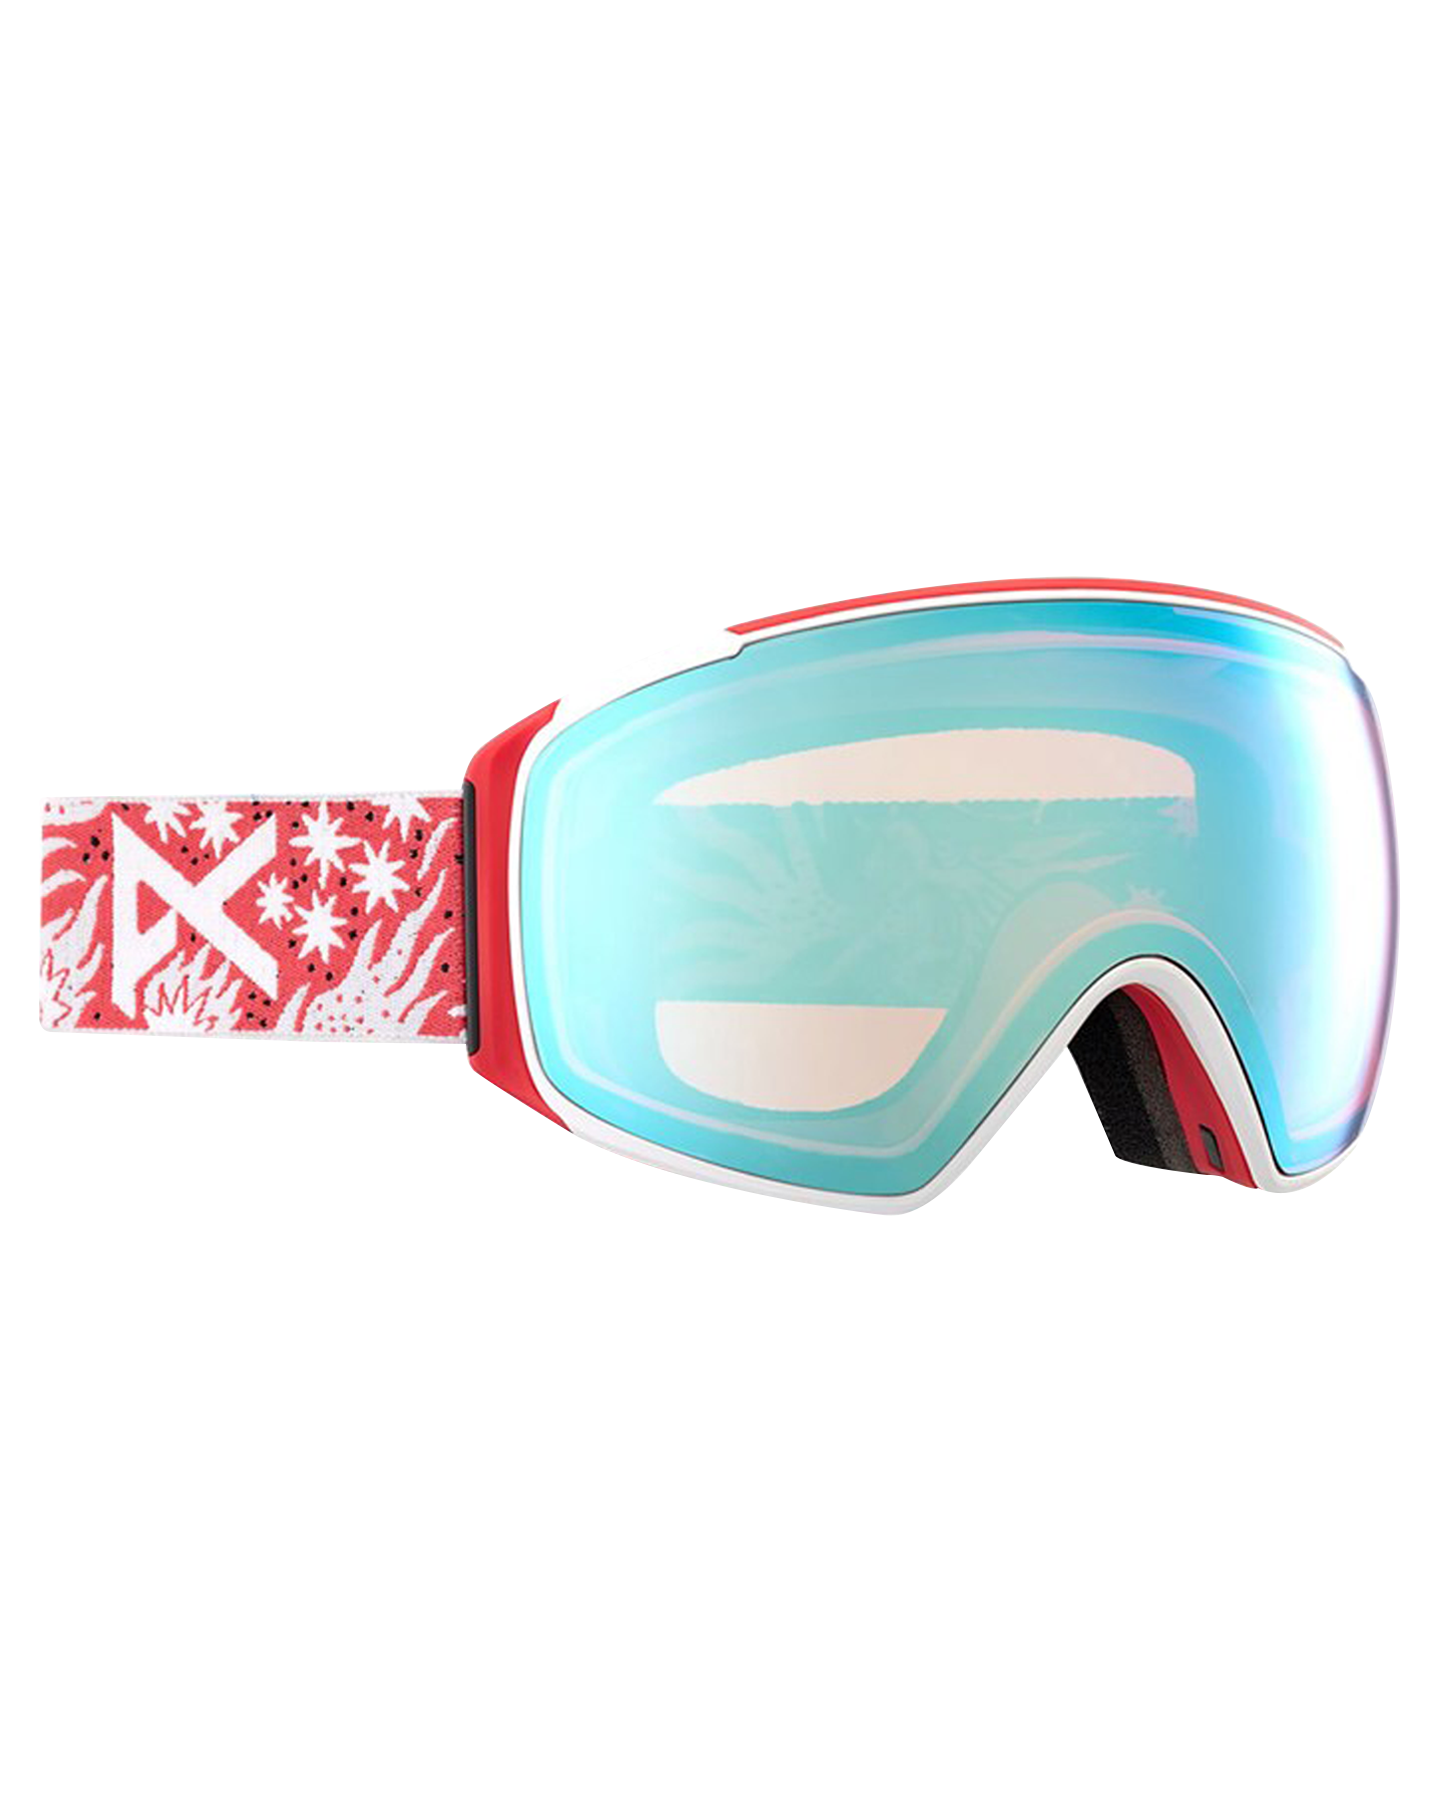 Anon M3 Low Bridge Fit Snow Goggles + Bonus Lens + MFI - Joshua Noom / Perceive Variable Blue Men's Snow Goggles - Trojan Wake Ski Snow